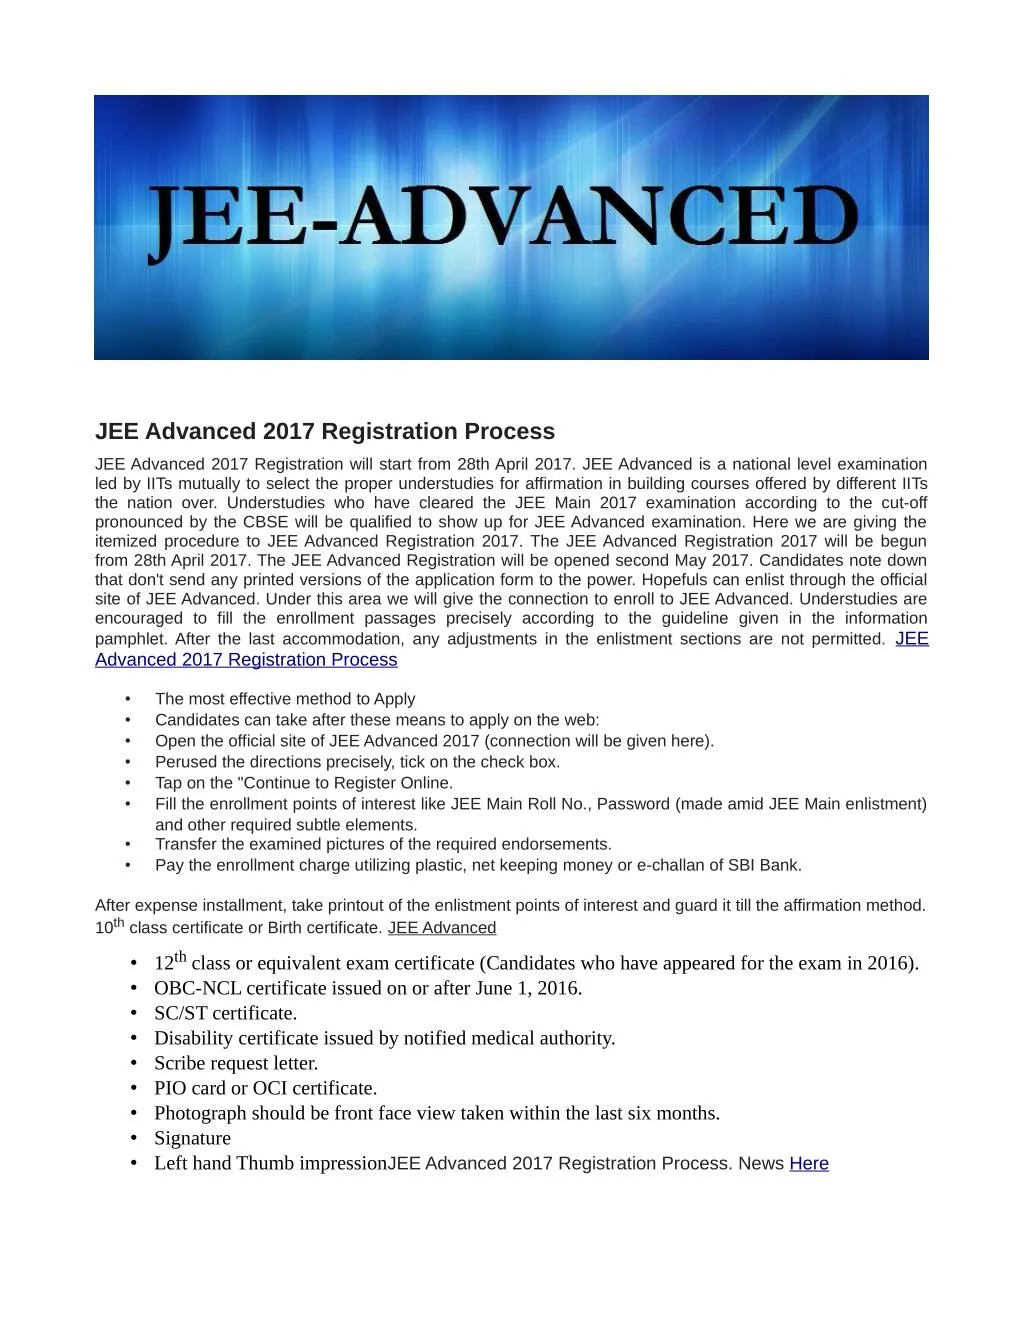 jee advanced 2017 registration process